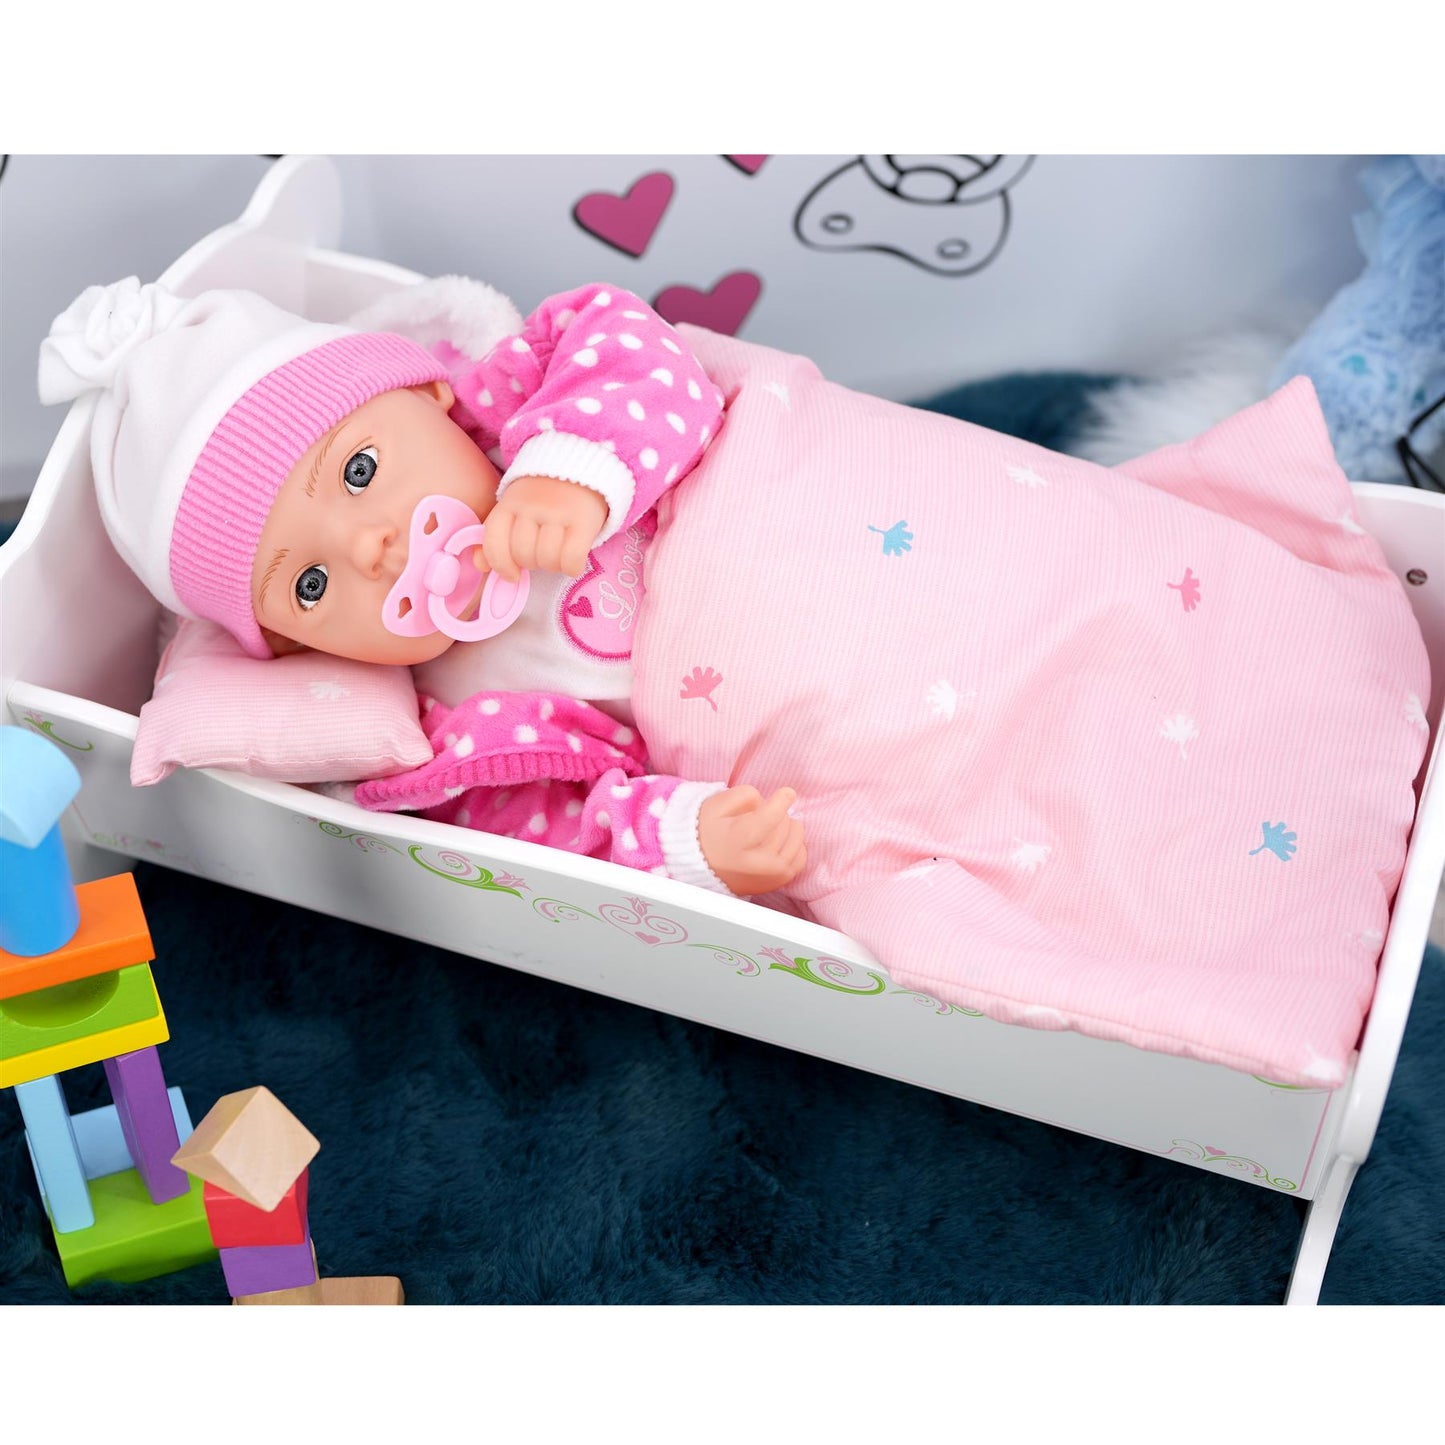 Candy Pink Bibi Baby Doll Toy With Dummy & Sounds by BiBi Doll - UKBuyZone